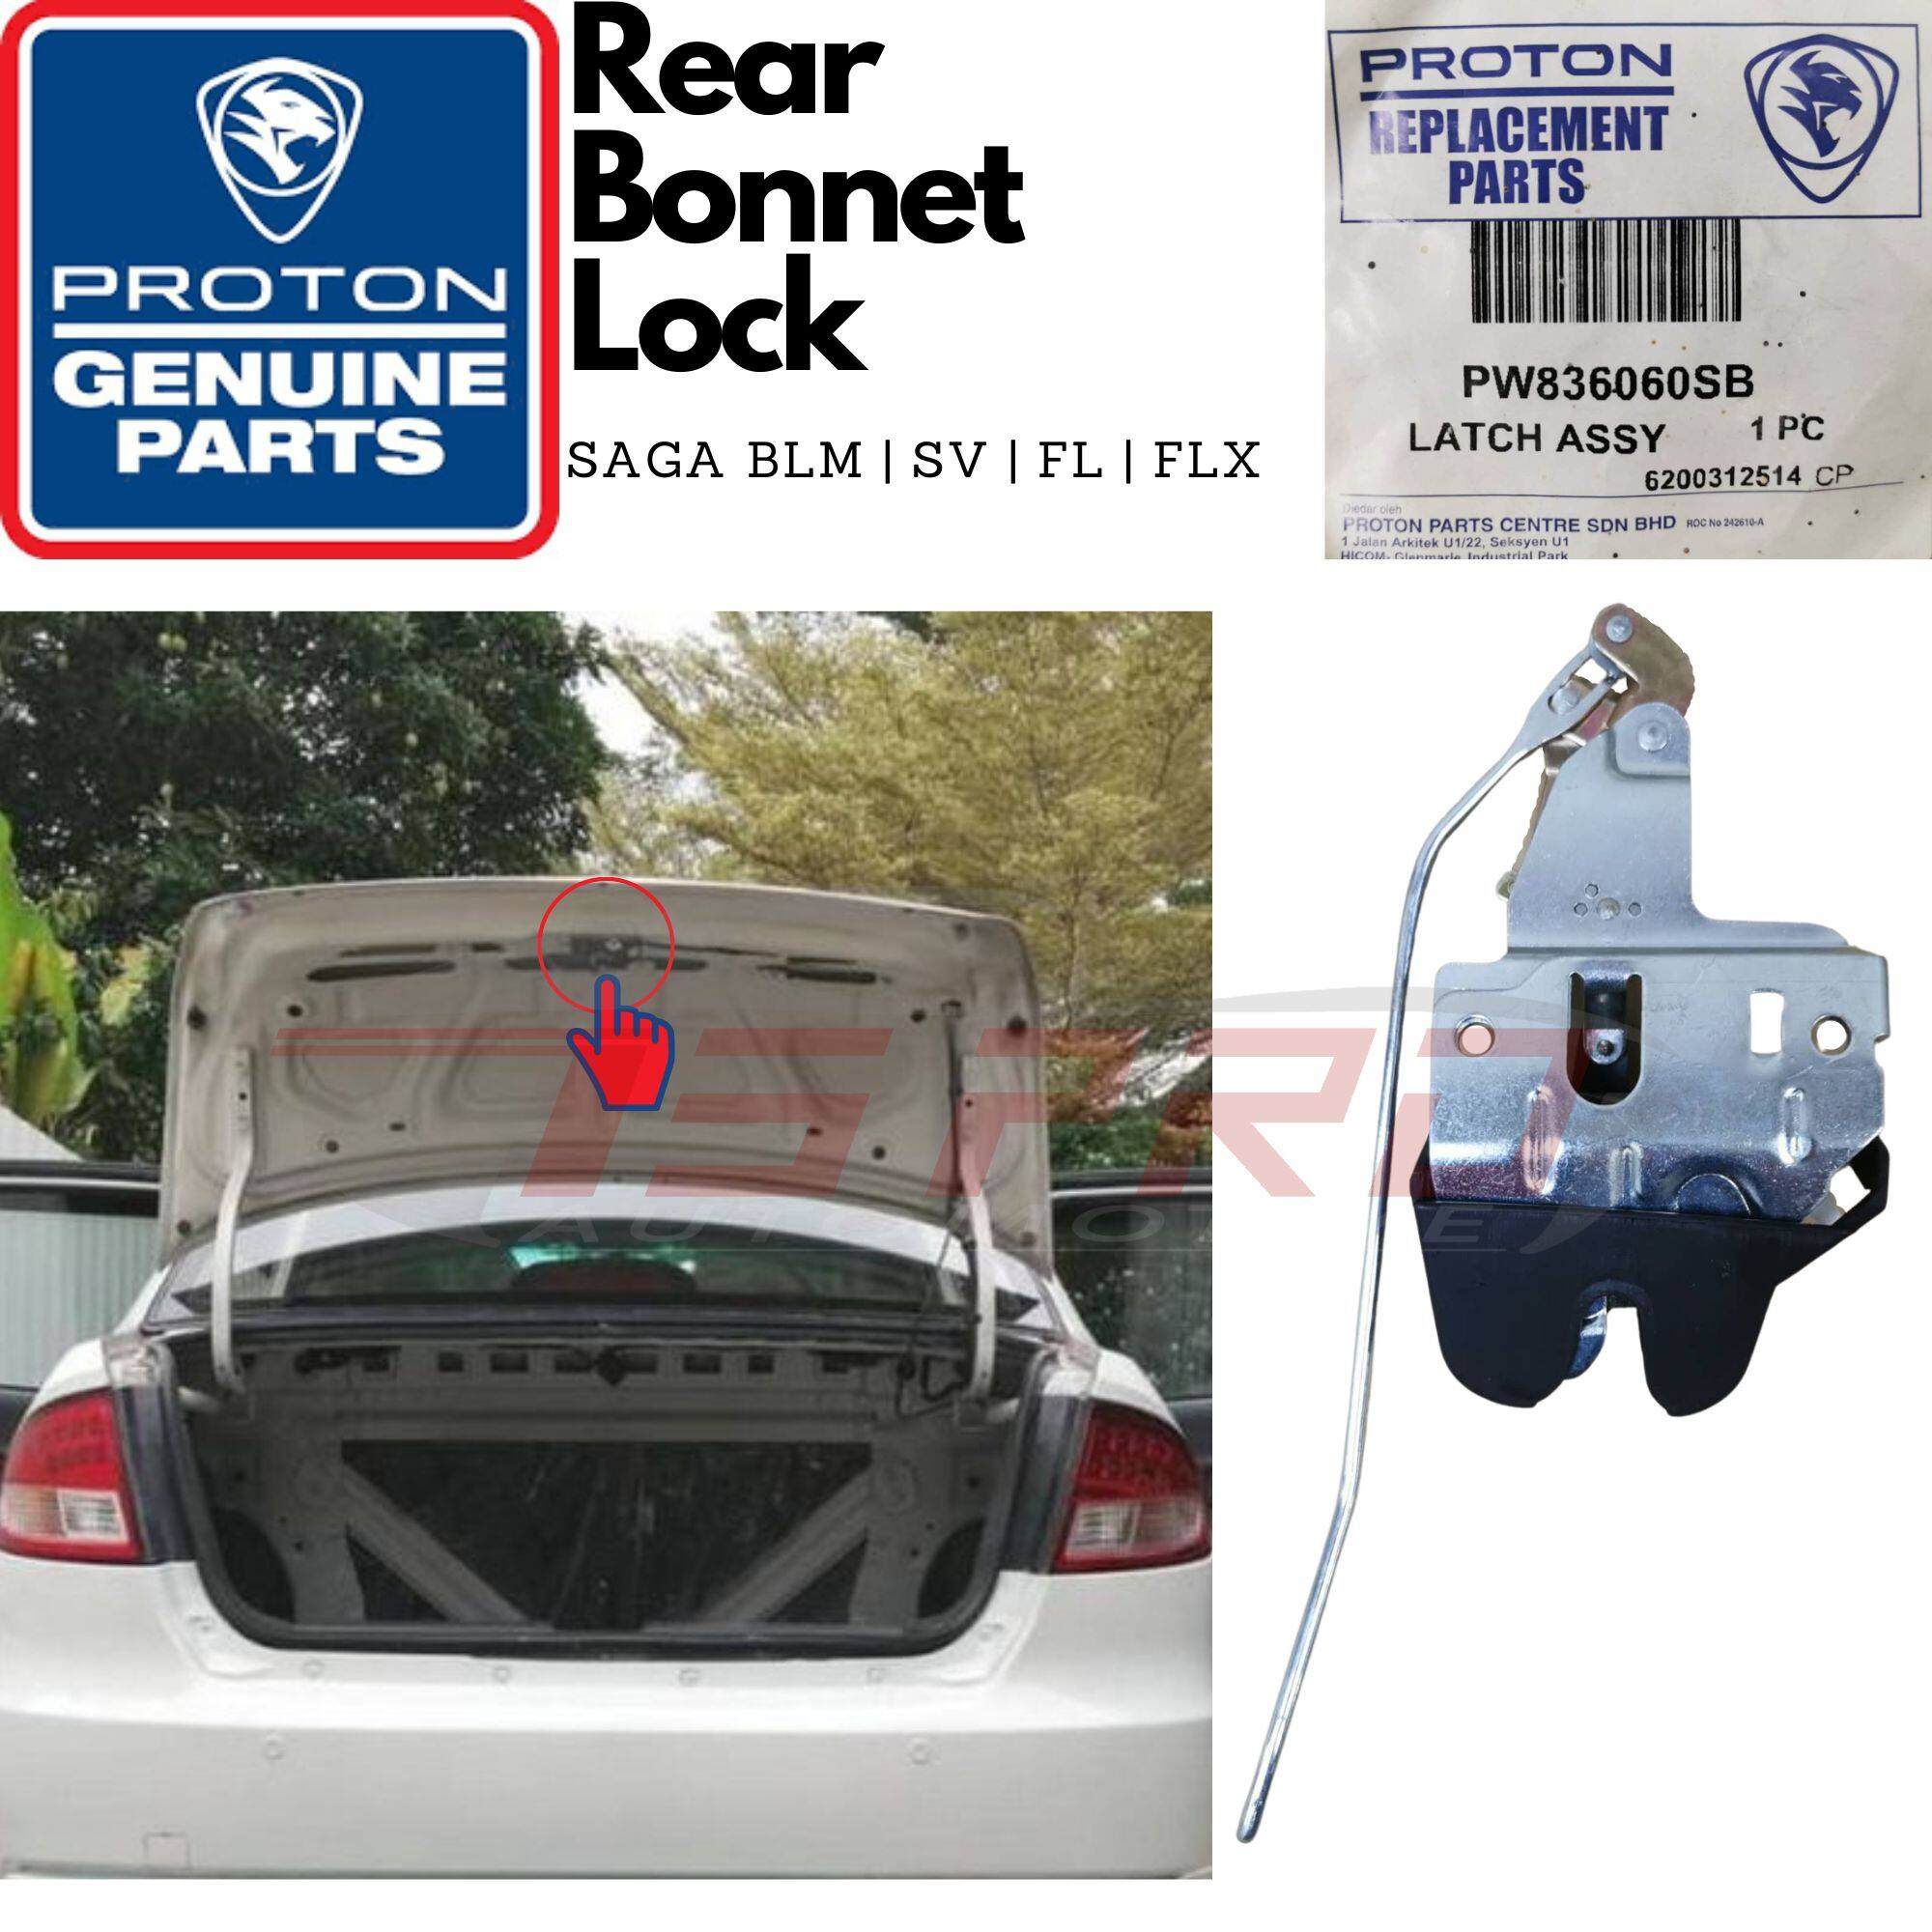 Proton Saga BLM SV FL FLX Genuine Rear Bonnet Lock Hood Belakang